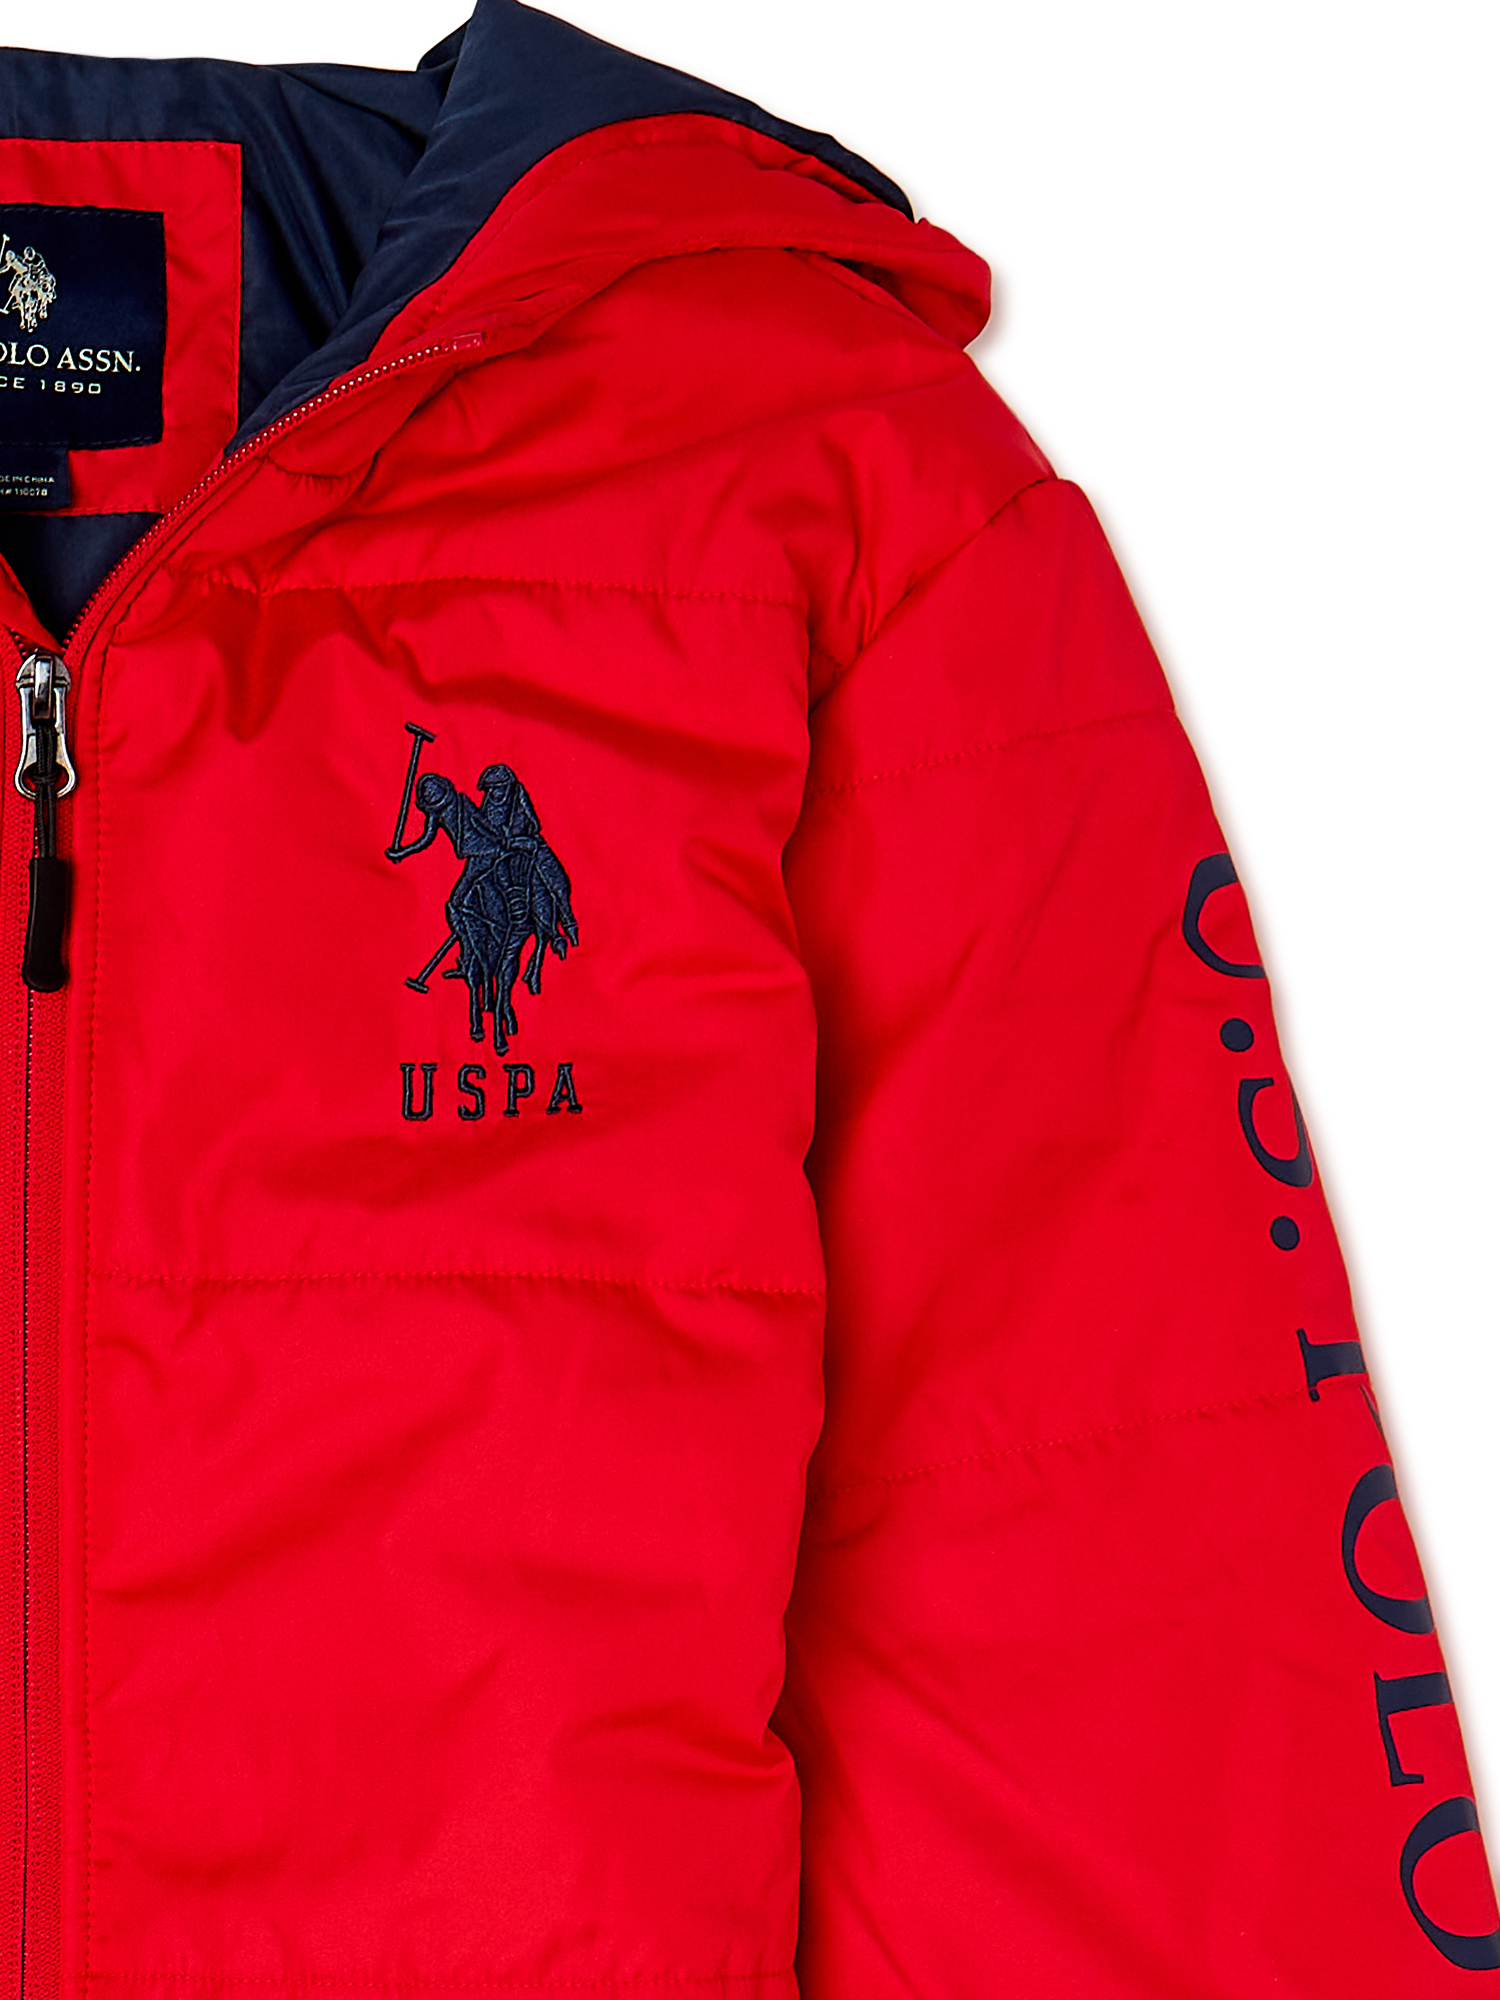 U.S. Polo Assn. Boys’ Logo Puffer Jacket, Sizes 8-20 - image 2 of 5